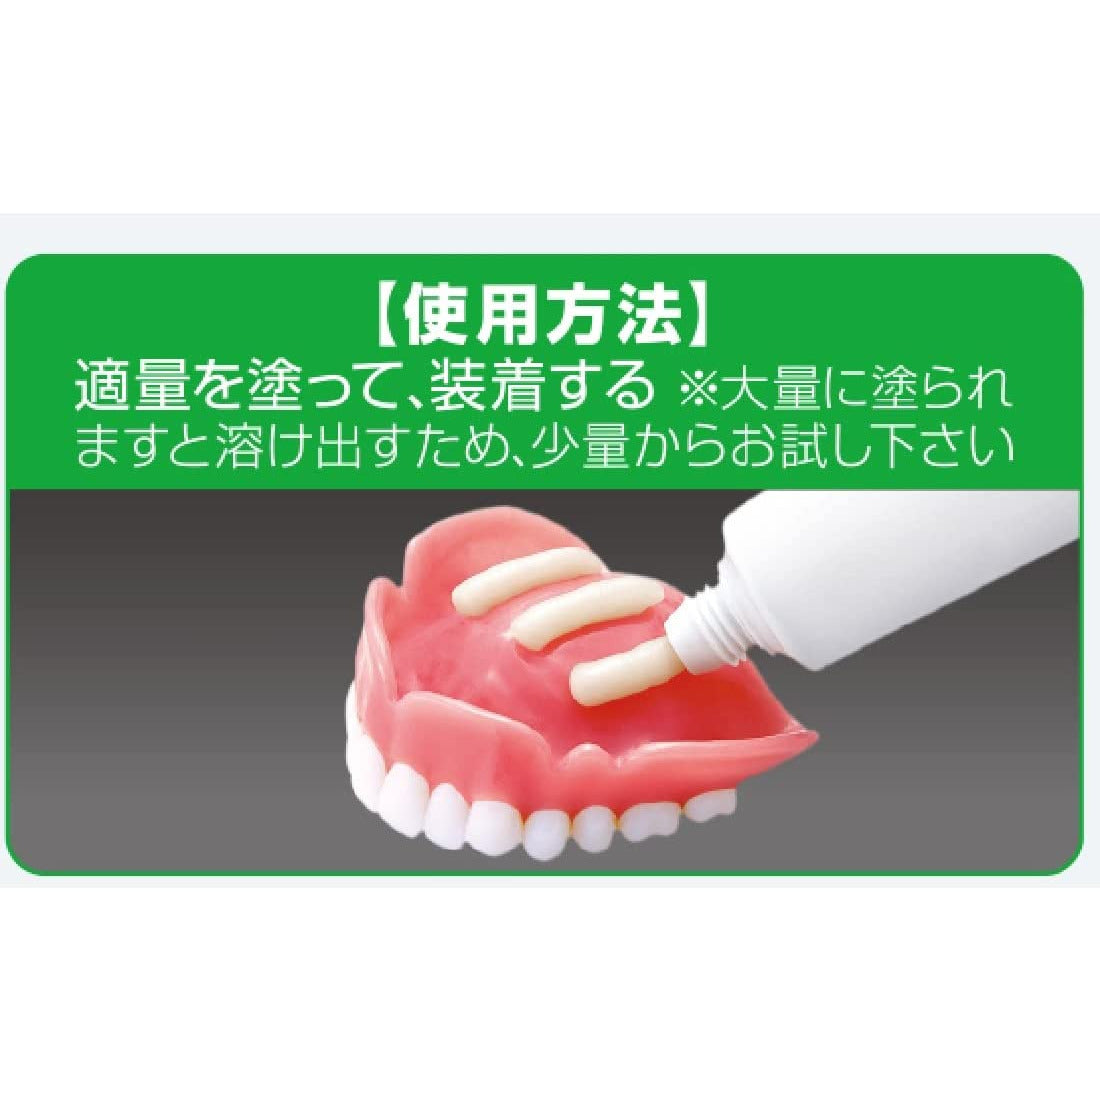 Tough Grip Denture Stabilizer (Full/Partial Dentures) No Additives